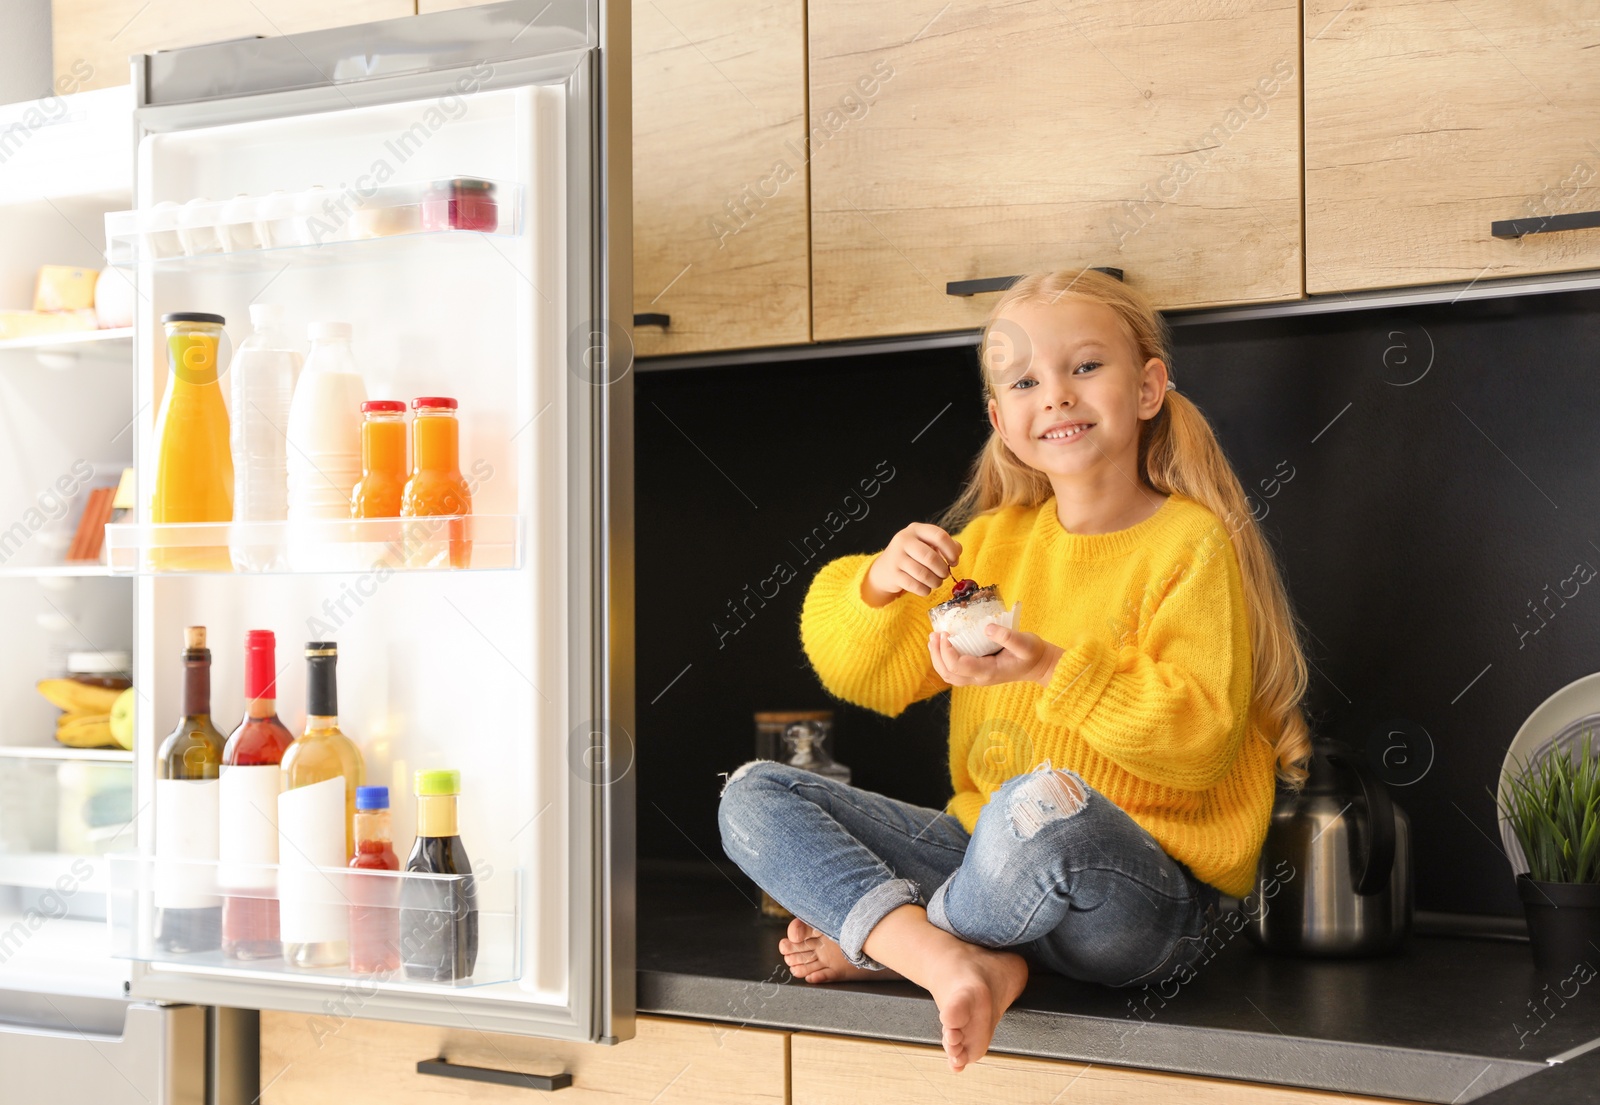 Photo of Girl eating dessert near refrigerator in kitchen